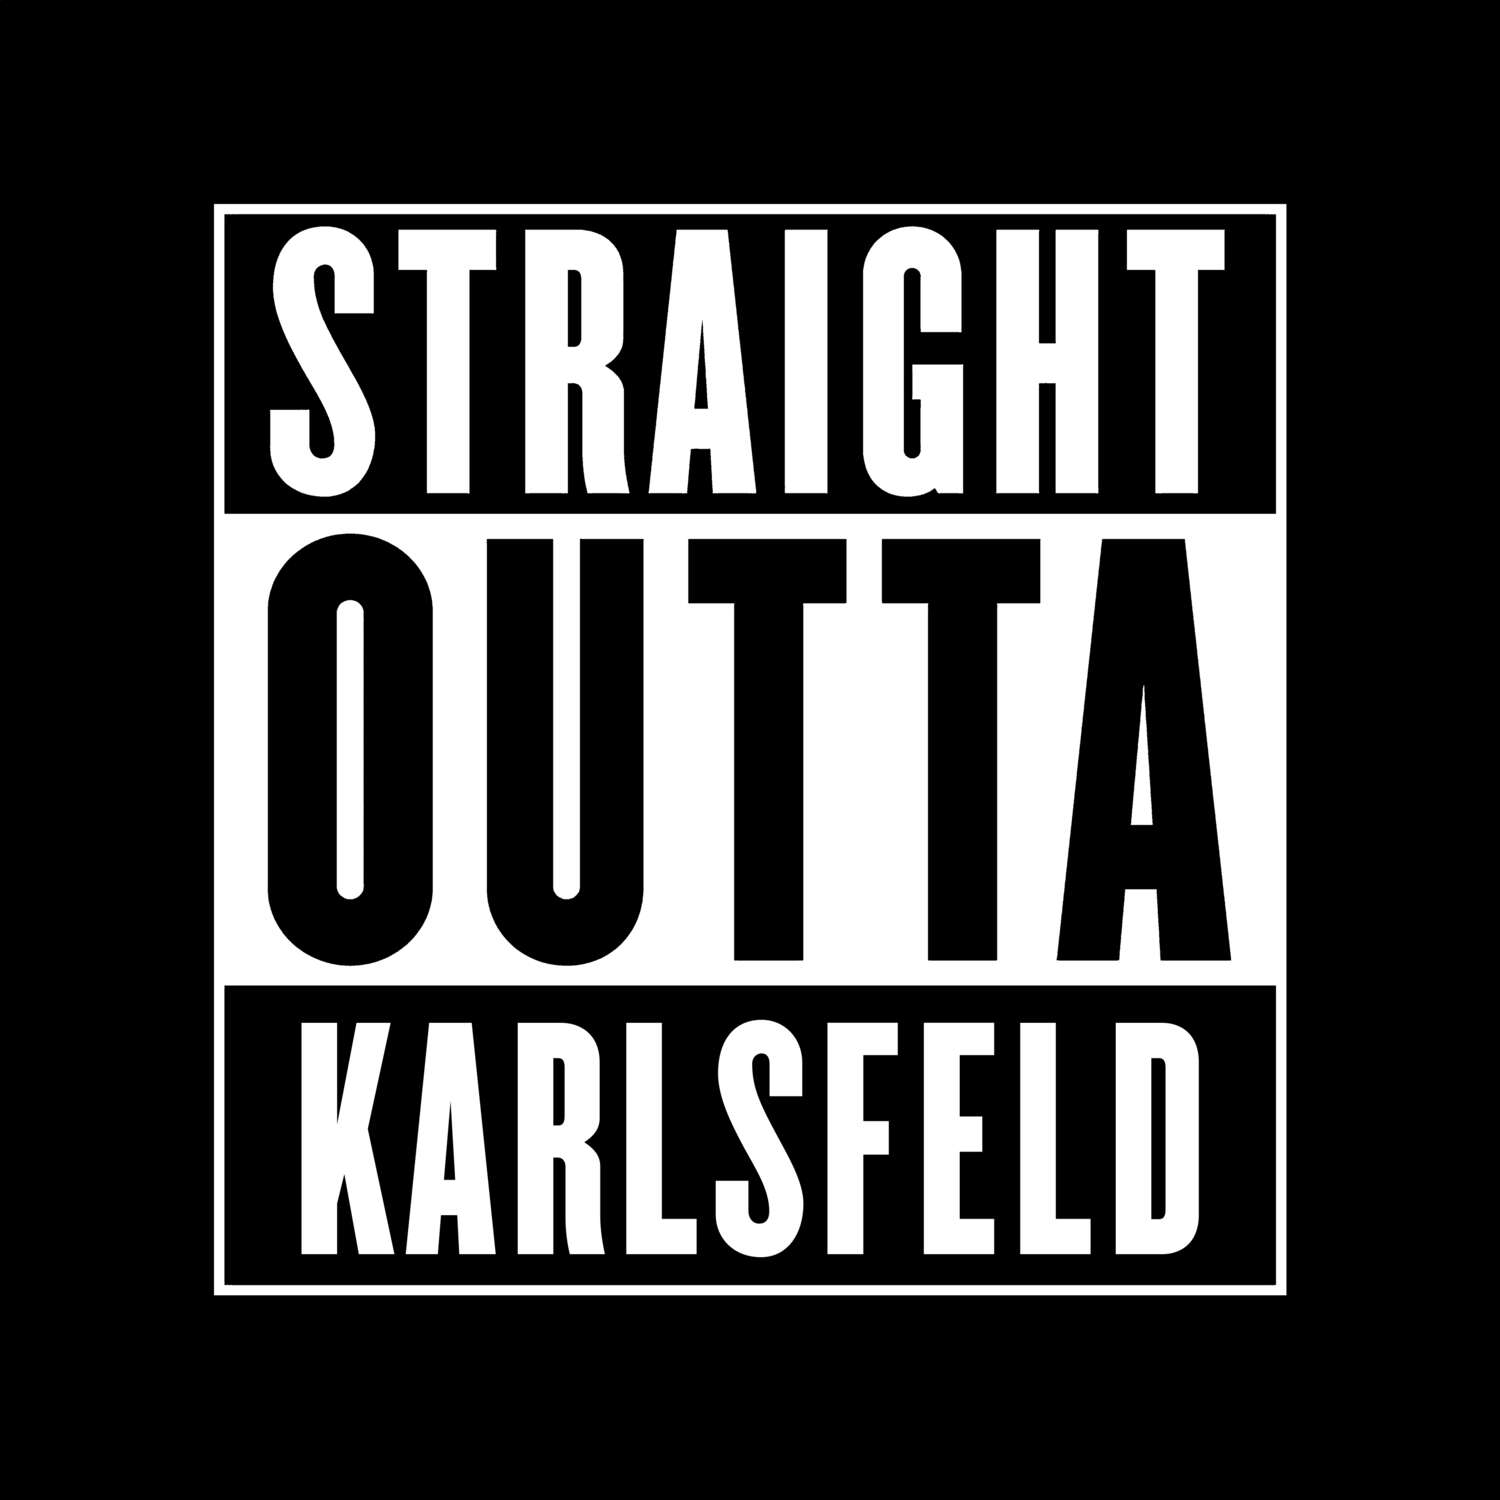 Karlsfeld T-Shirt »Straight Outta«